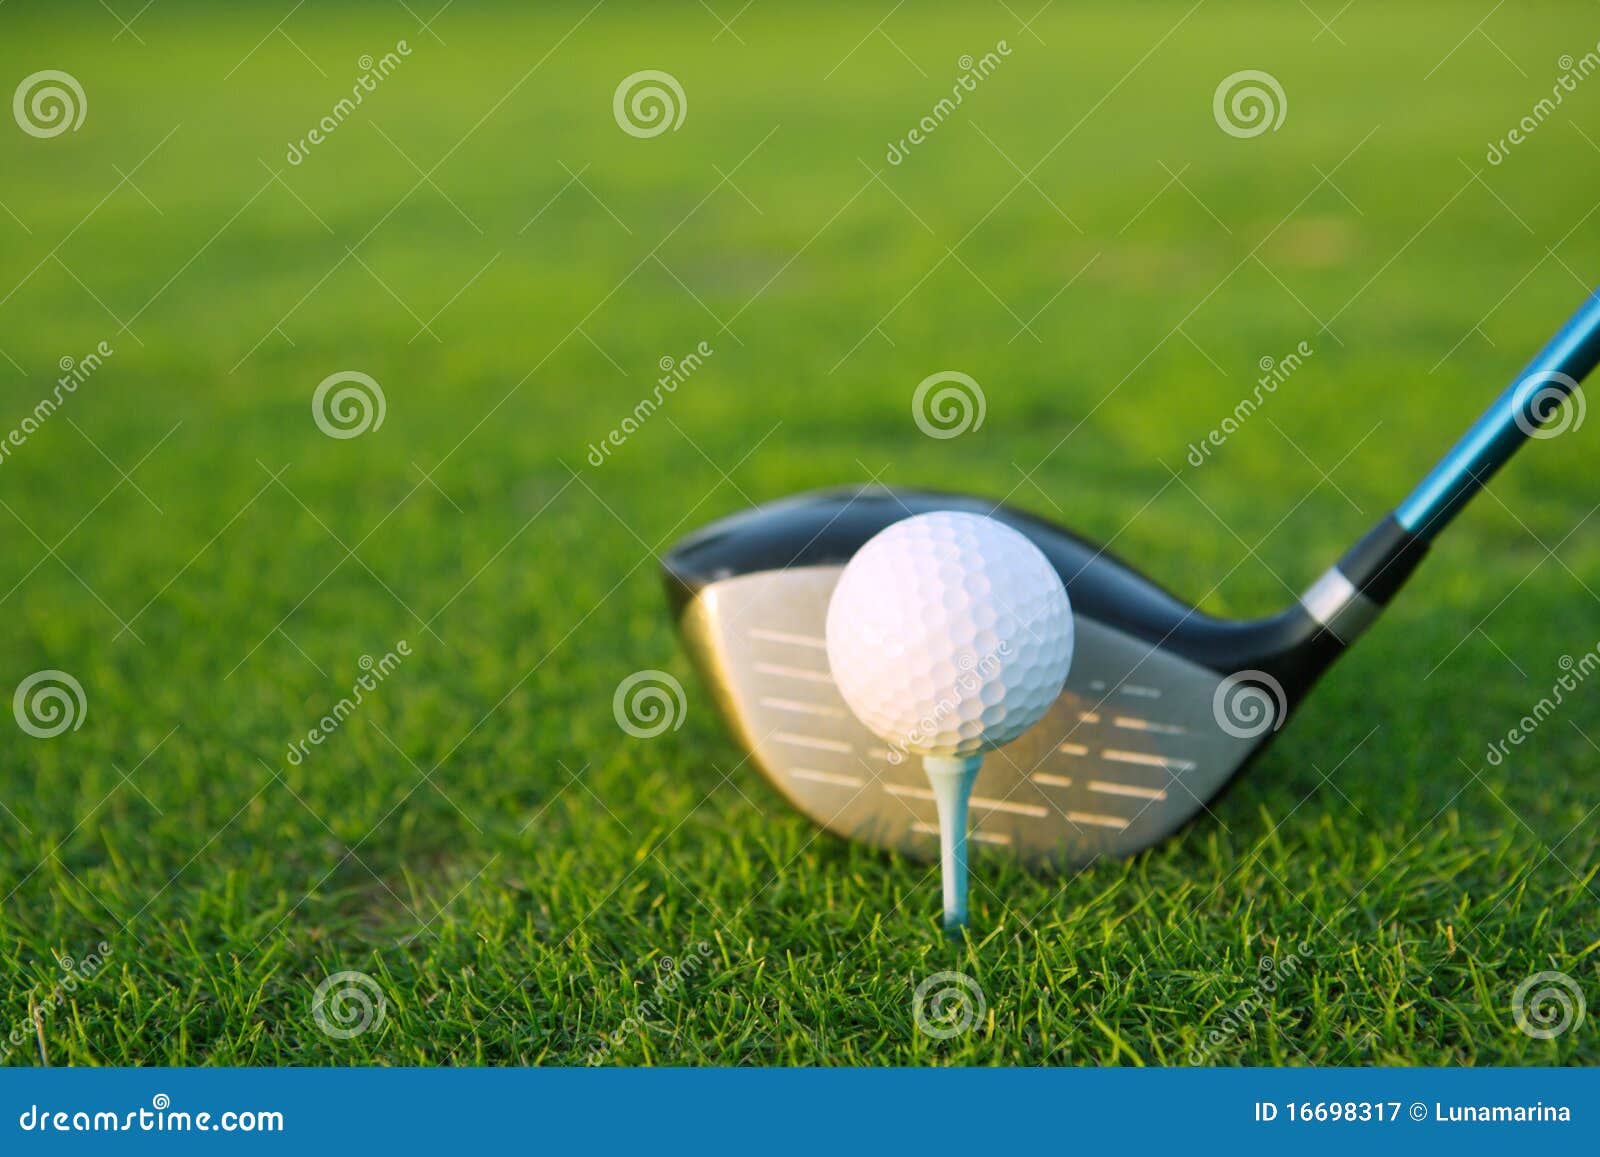 golf tee ball club driver in green grass course